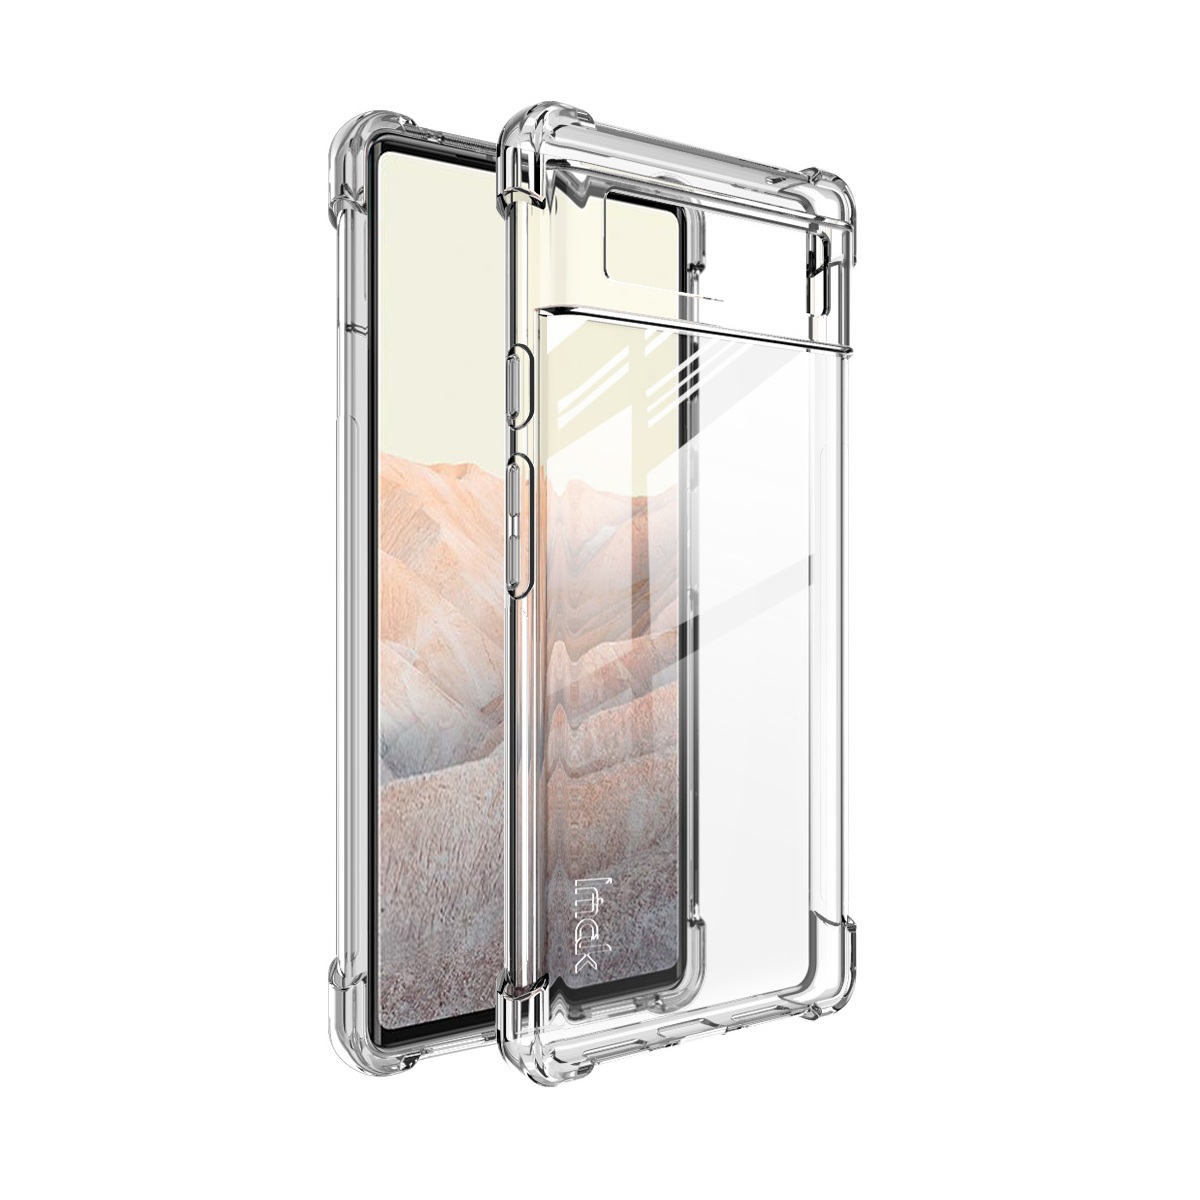 Samsung Galaxy S20 FE Imak Shock-resistant Airbag Case